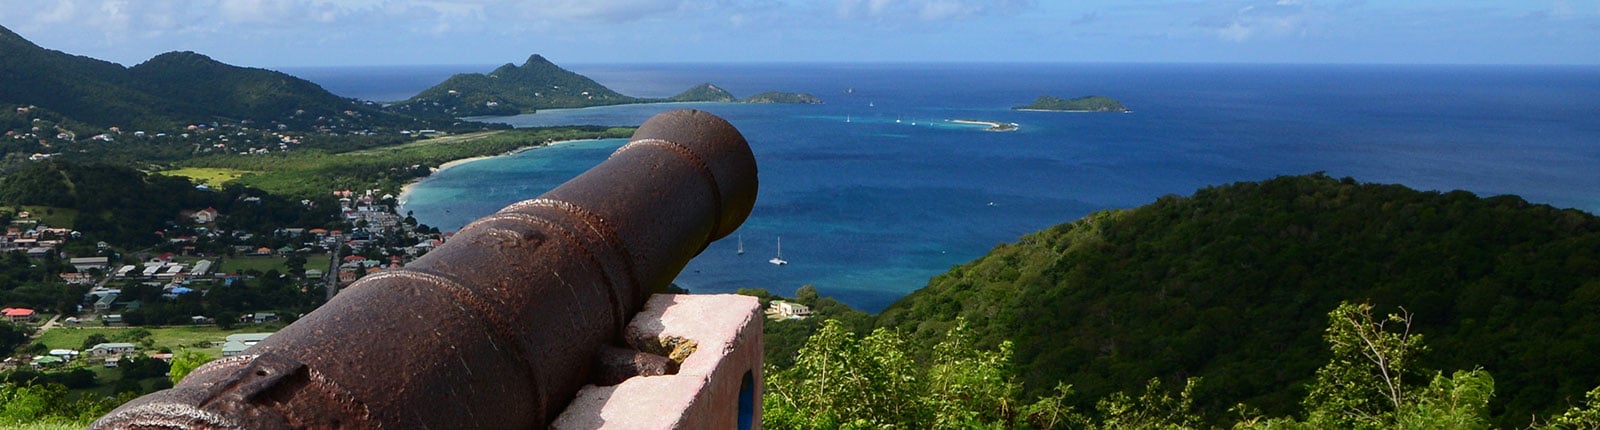 Looking across the barrel of a canon facing the ocean in Grenada